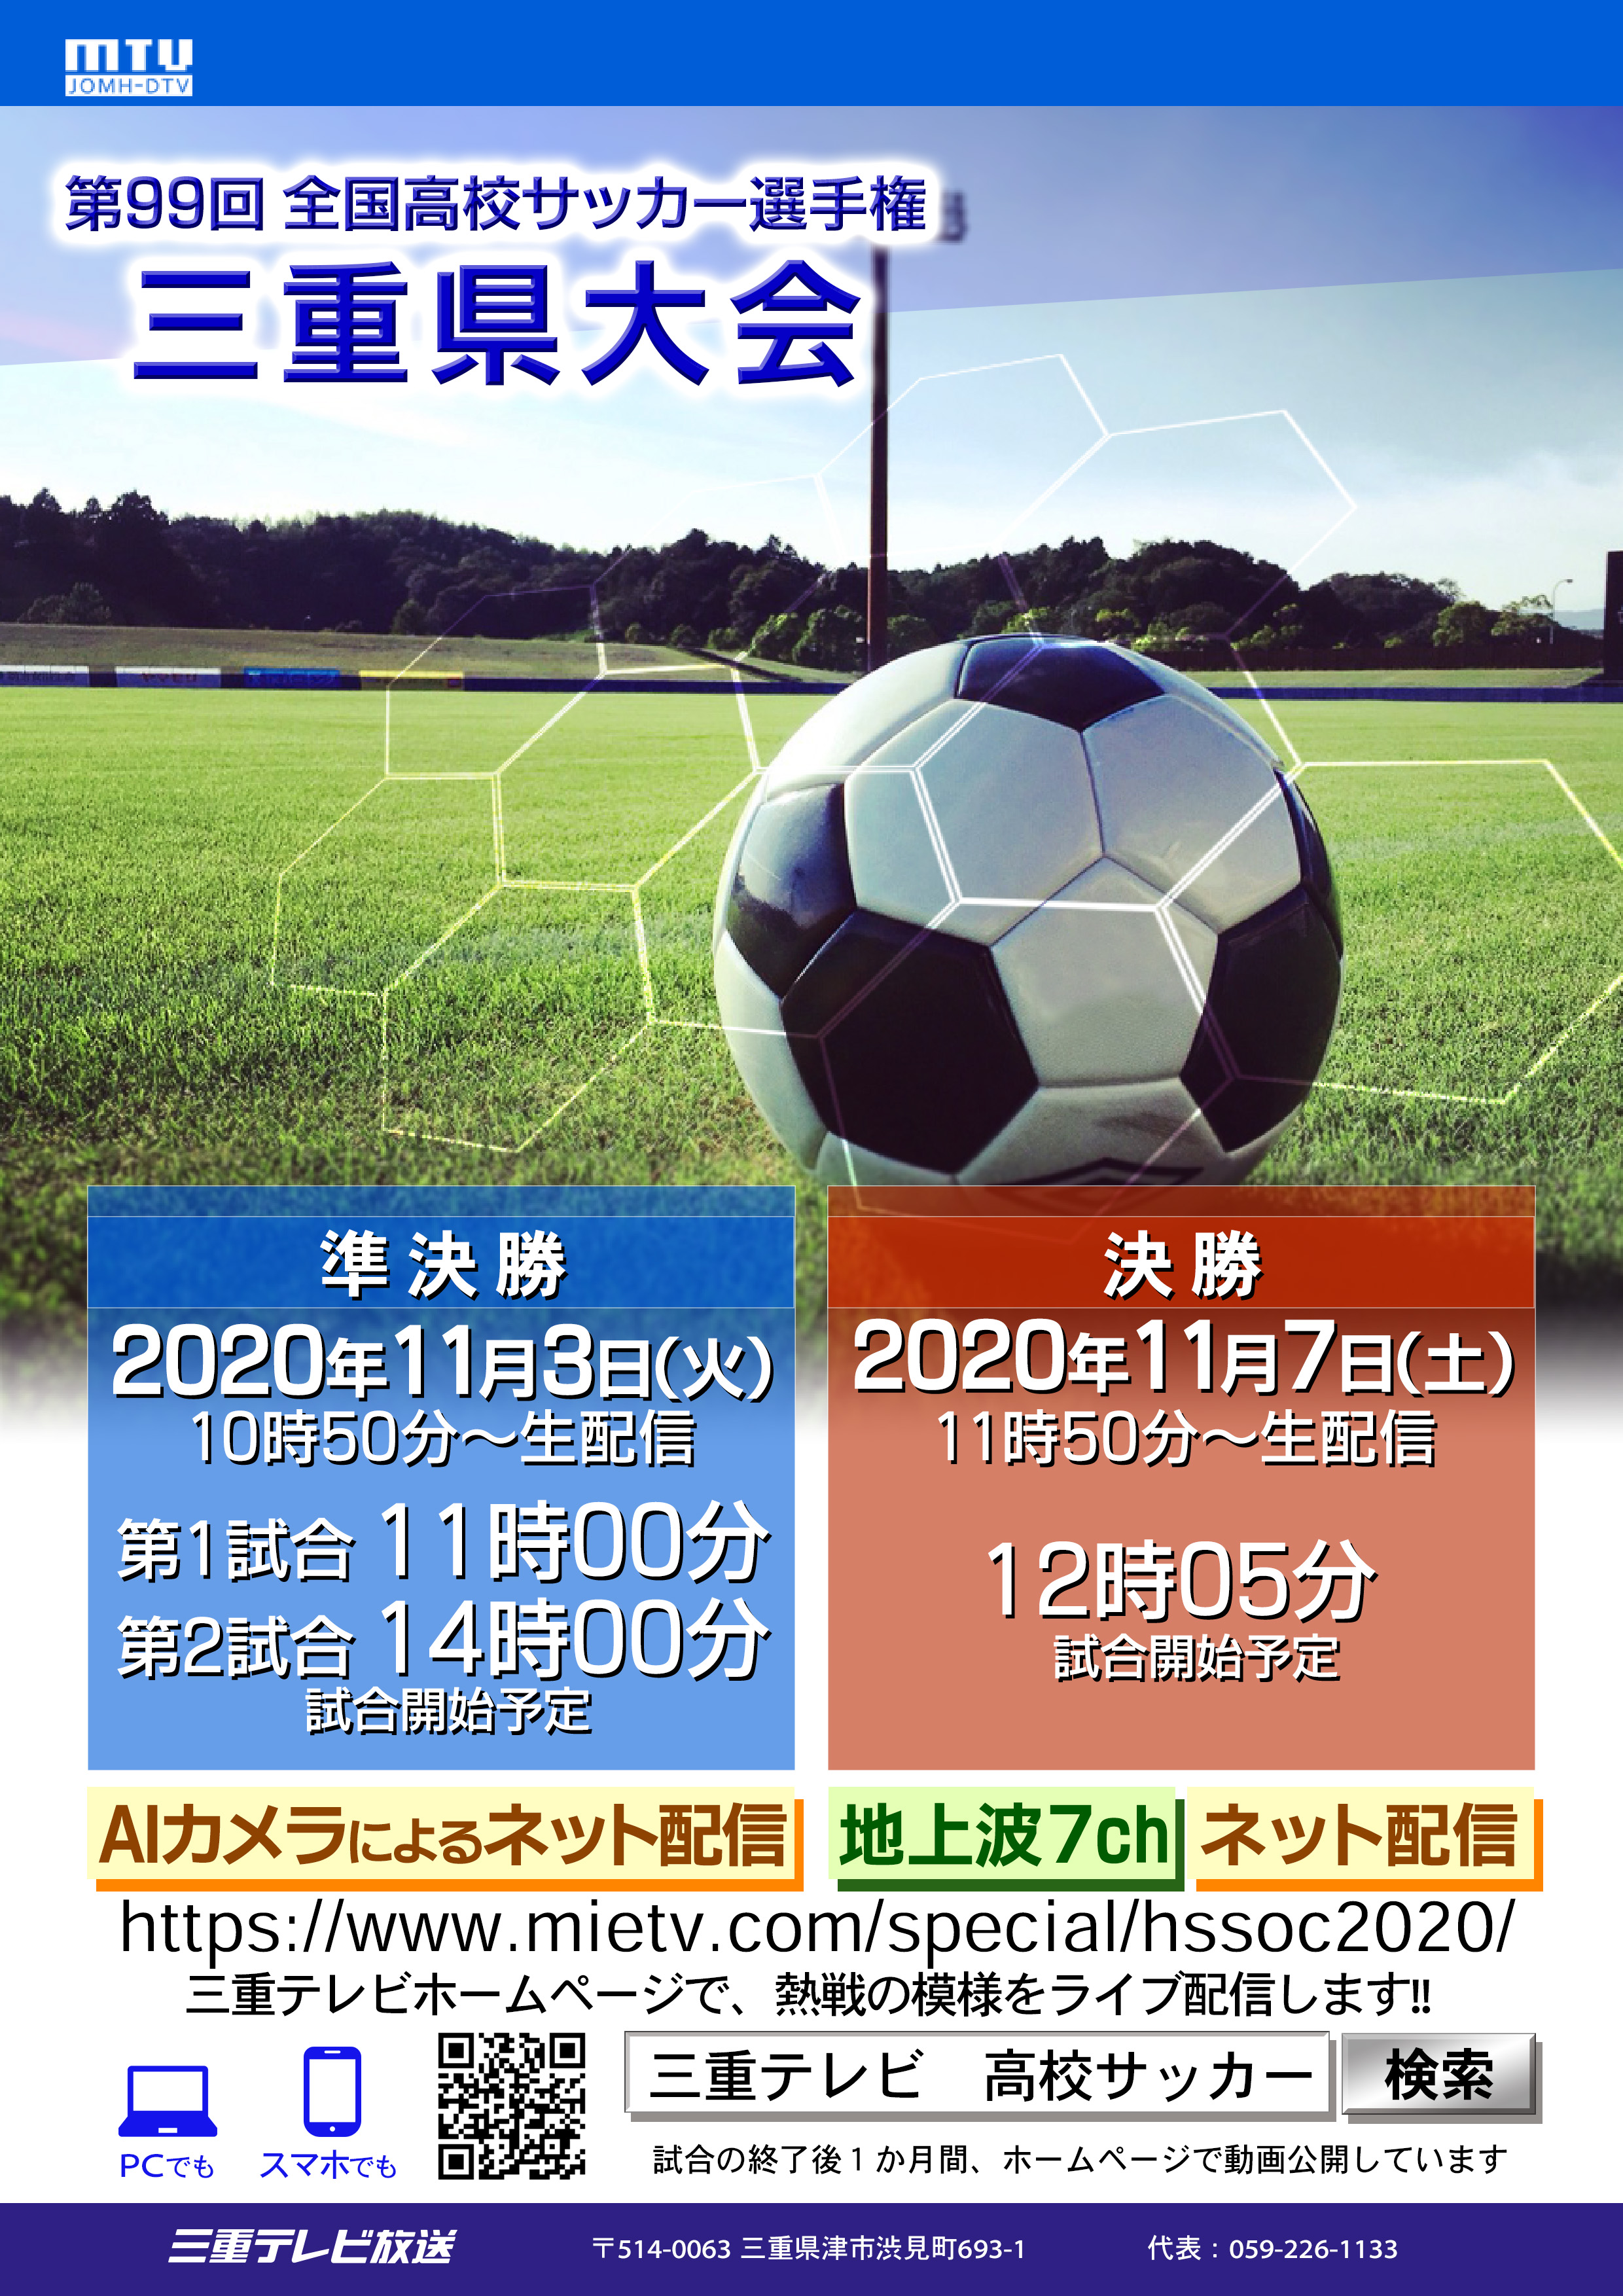 Tv等放送予定 第99回高校サッカー選手権大会について Jfa 公益財団法人日本サッカー協会